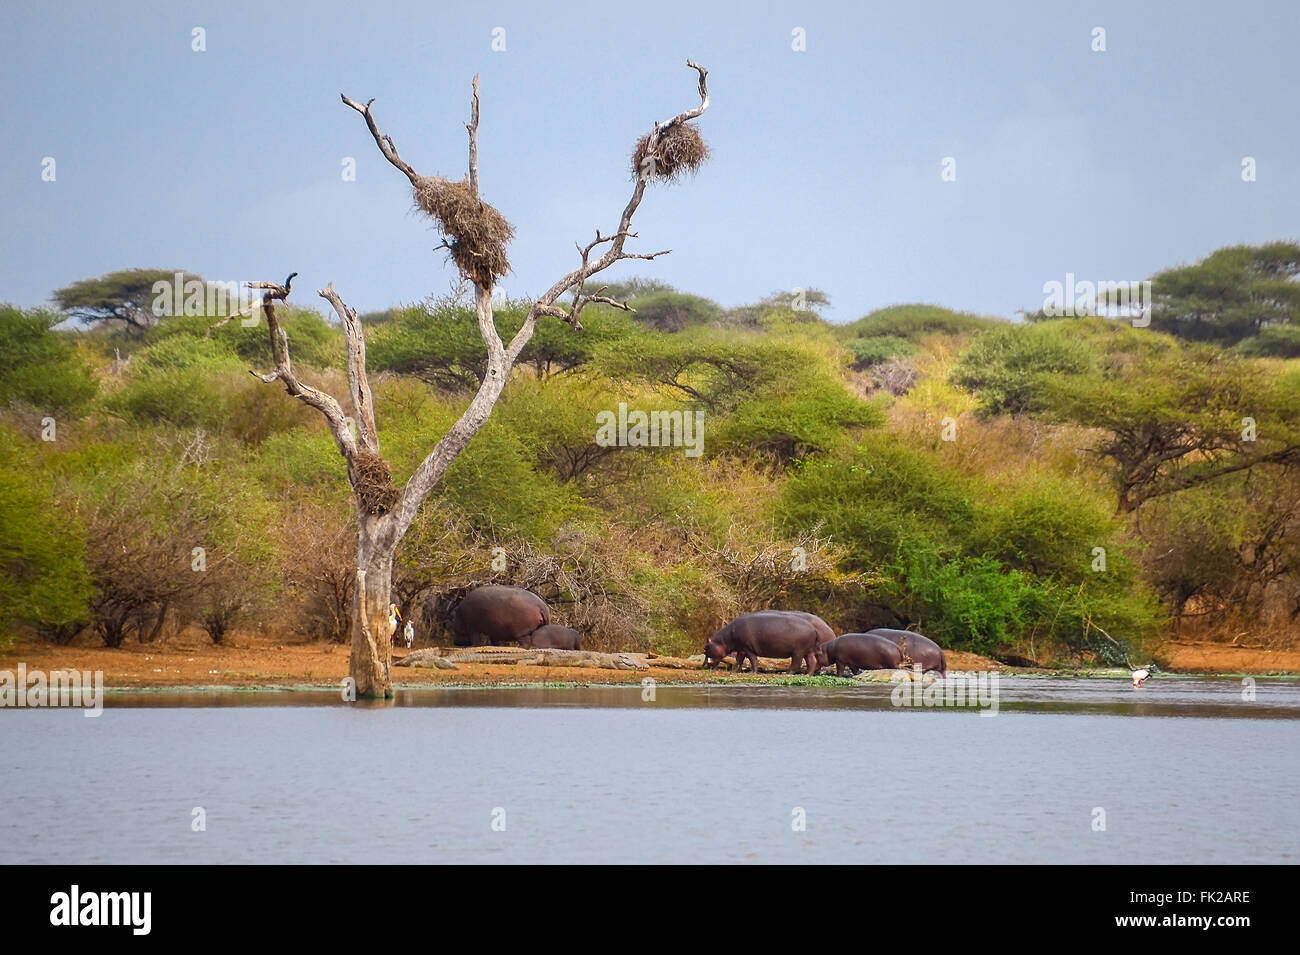 Nilpferd im Kruger National Park - Südafrika Stockfoto